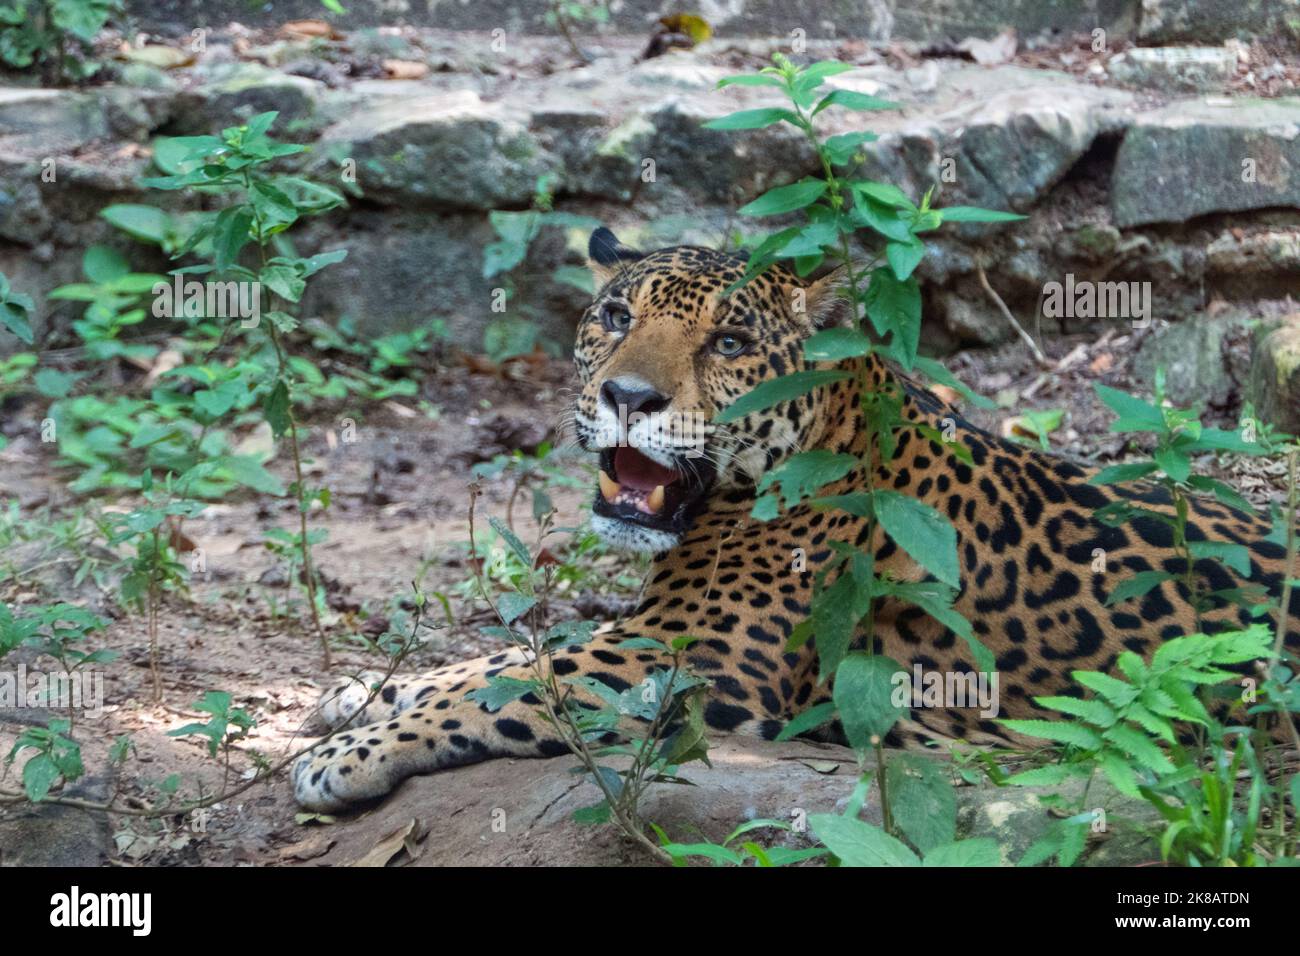 Female jaguar in zoo cage in Chiapas, Mexico. Big cat (Panthera onca) in enclosure Stock Photo